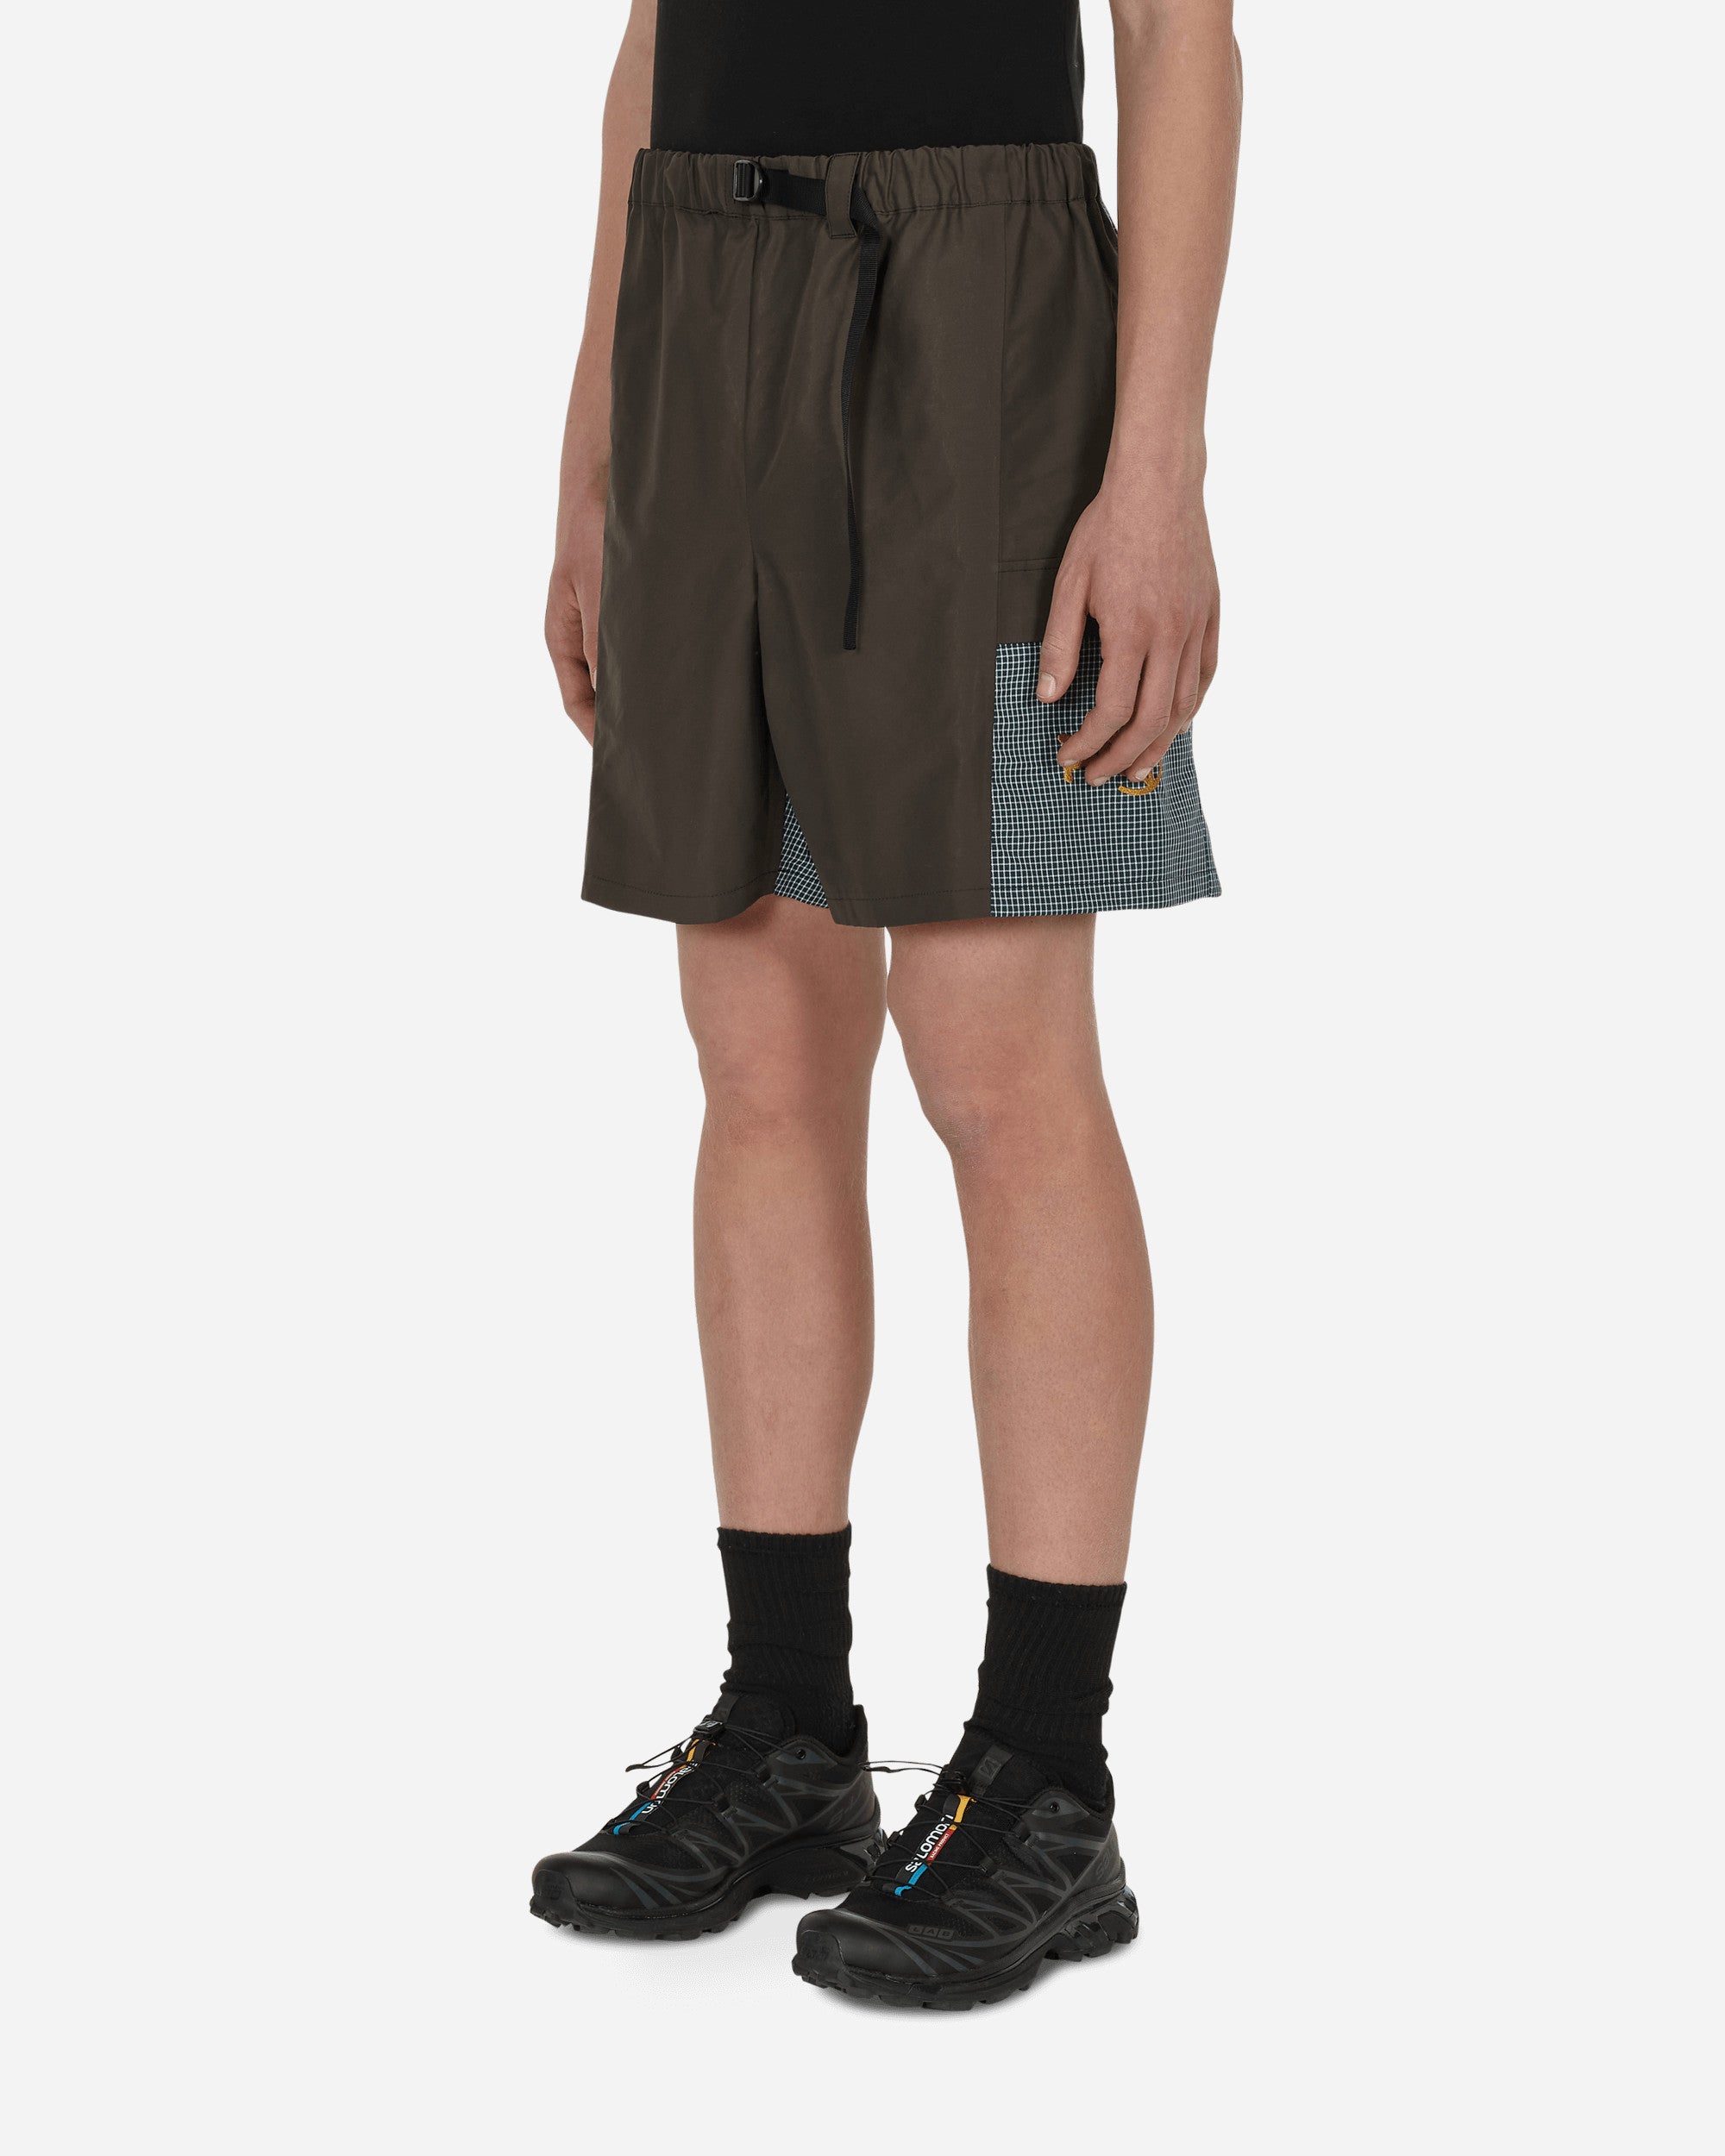 Rayon Vert W3W Furio Short Pants - Terra Brown Shorts Short 21WRVSS01 BROWN